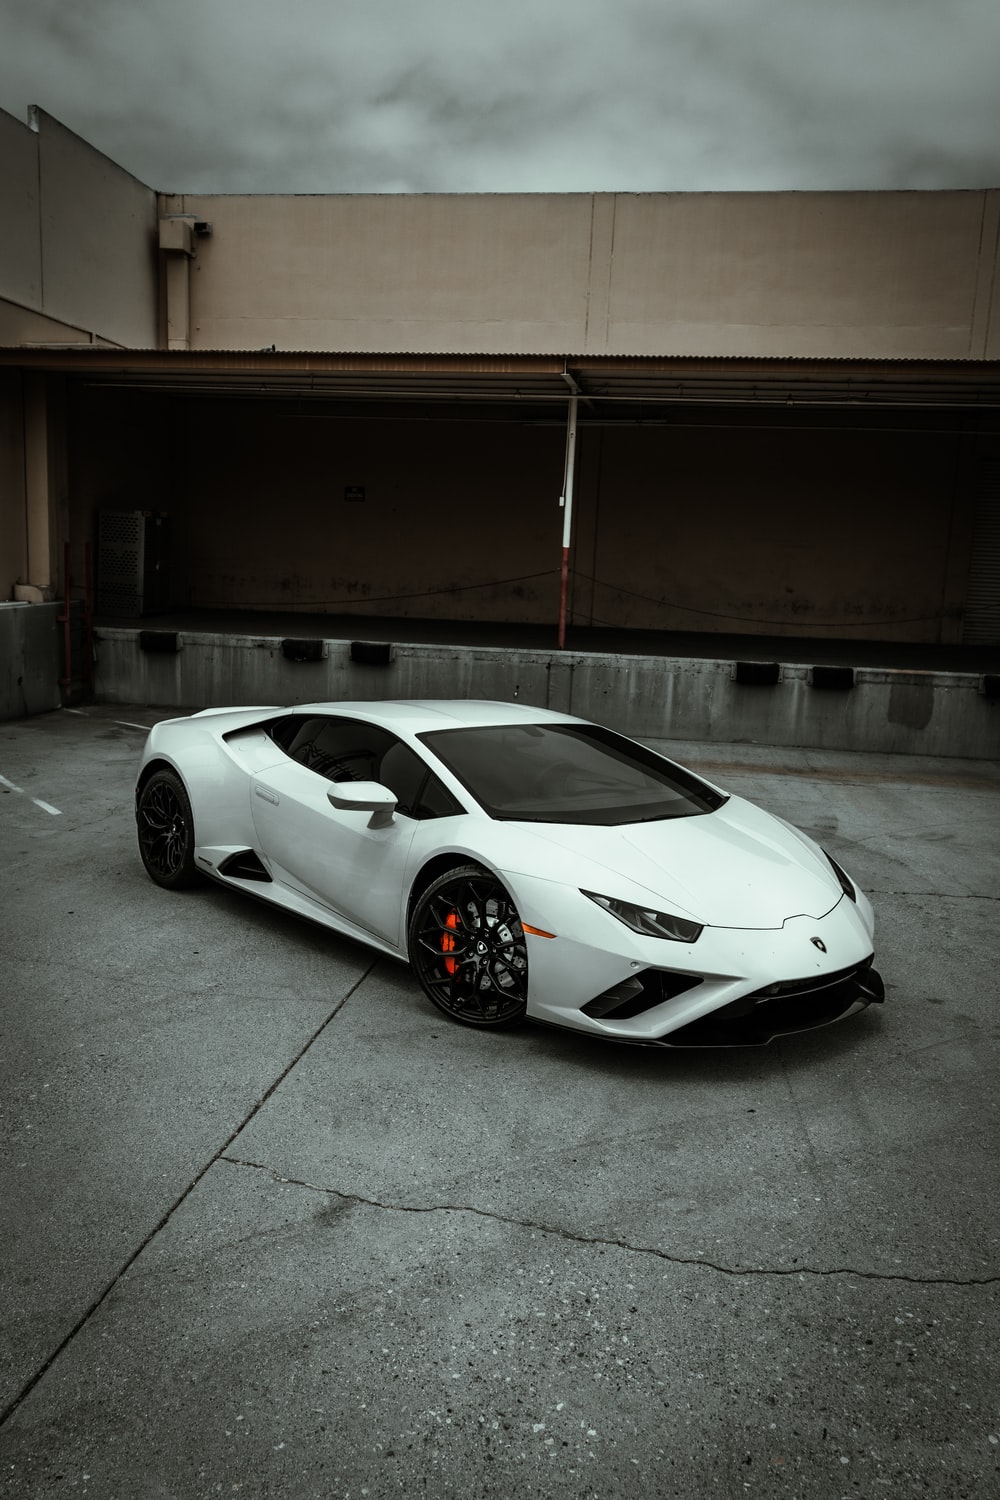 Lamborghini Wallpaper: Free HD Download [HQ]